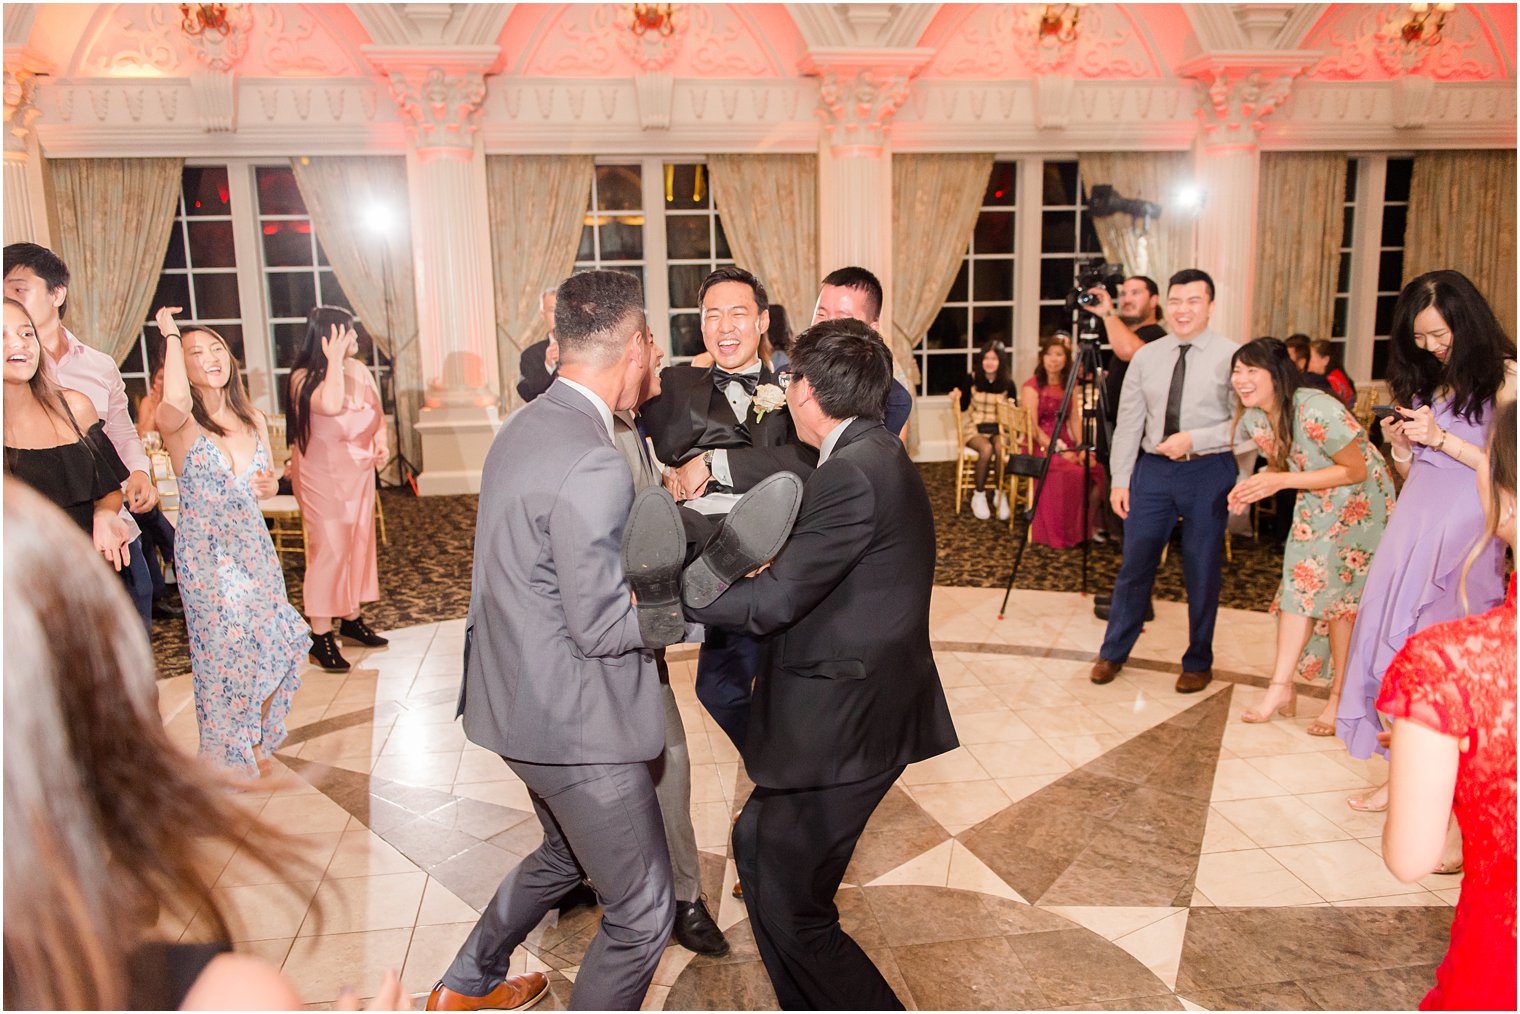 guests pick up groom during NJ wedding reception dancing